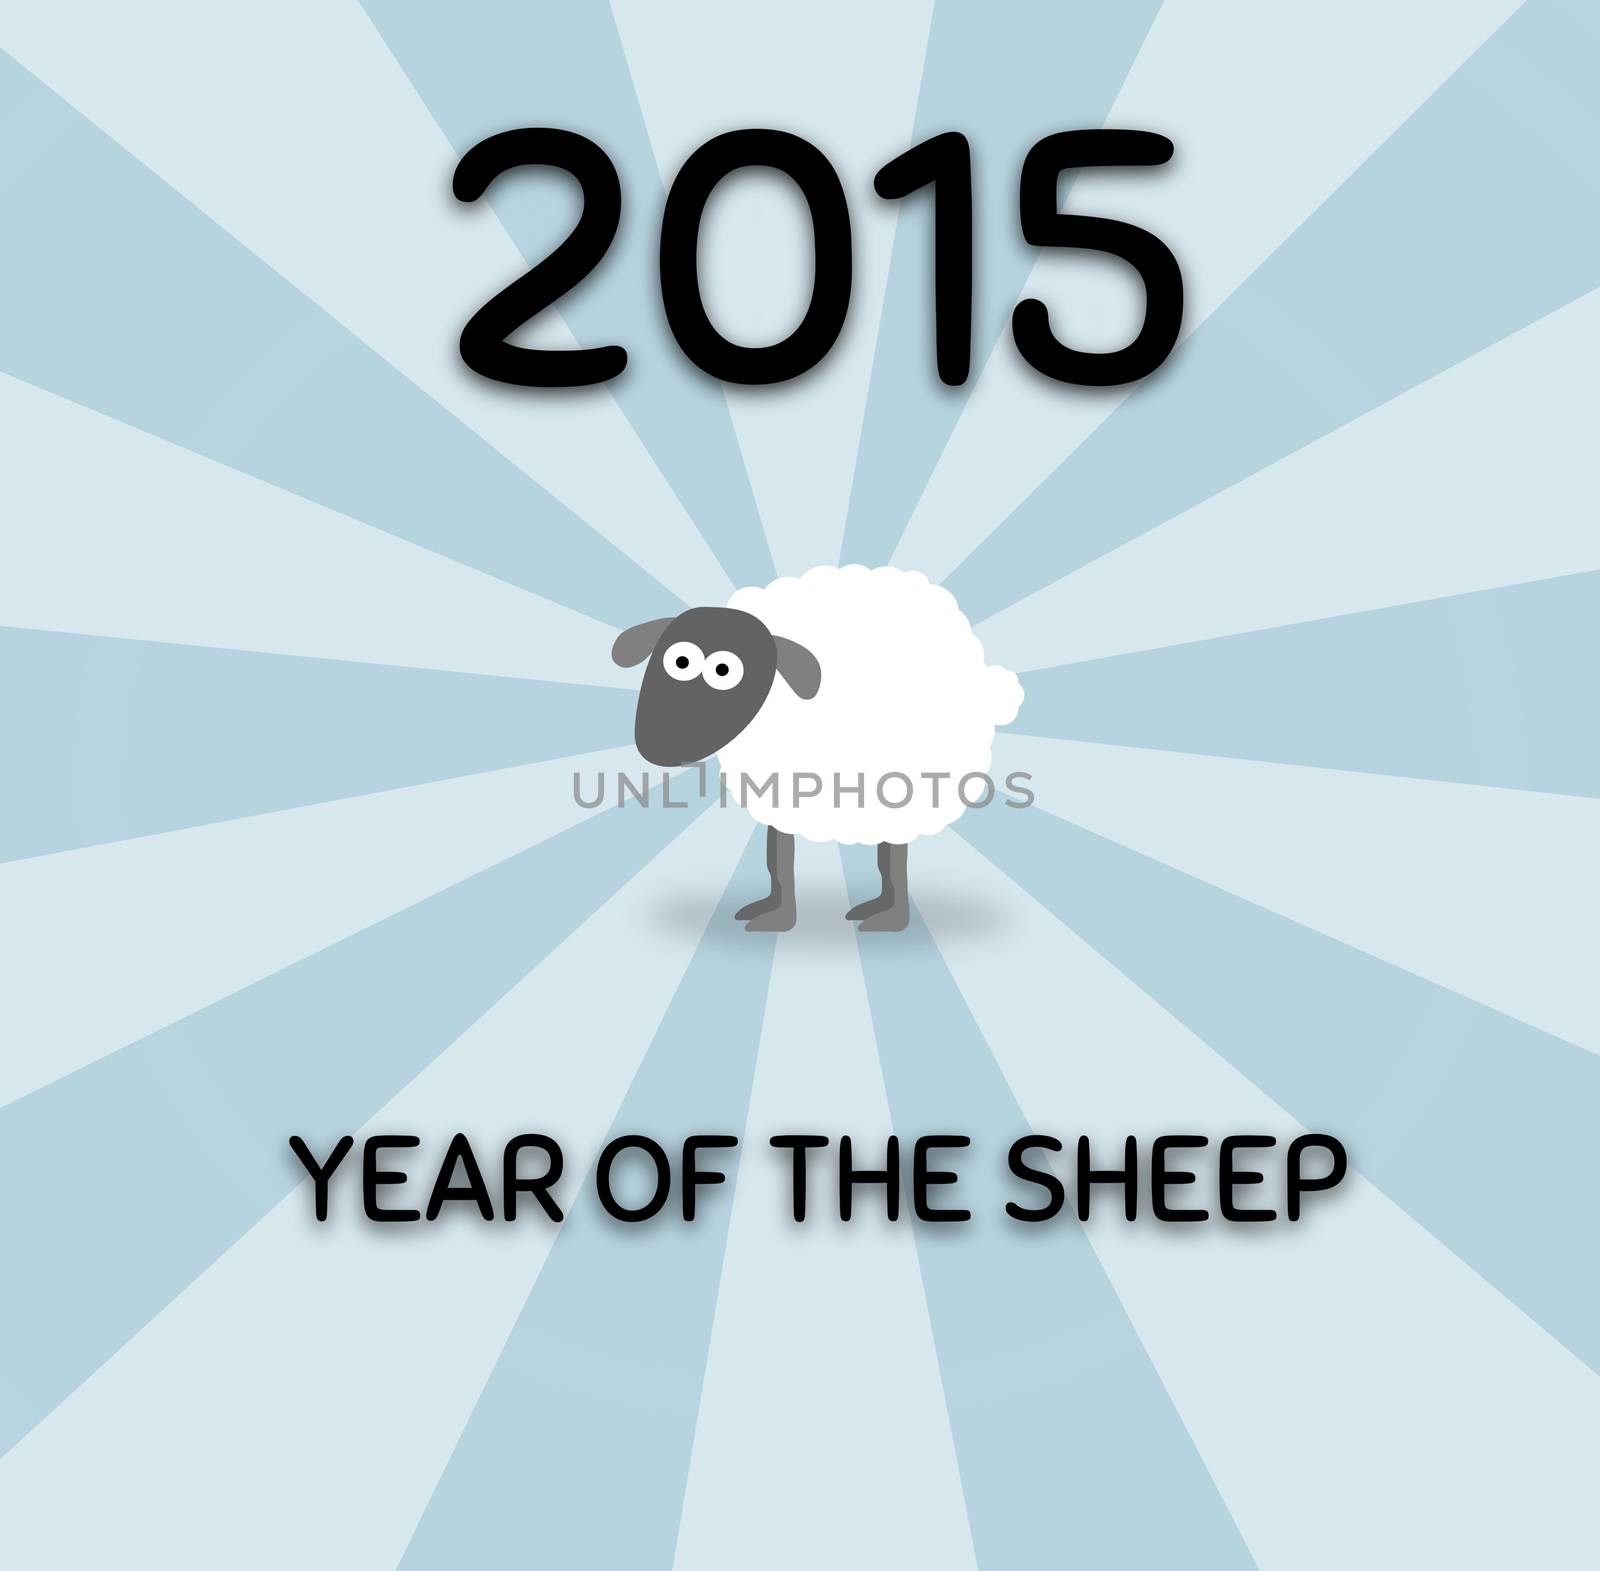 Year of the Sheep by darrenwhittingham